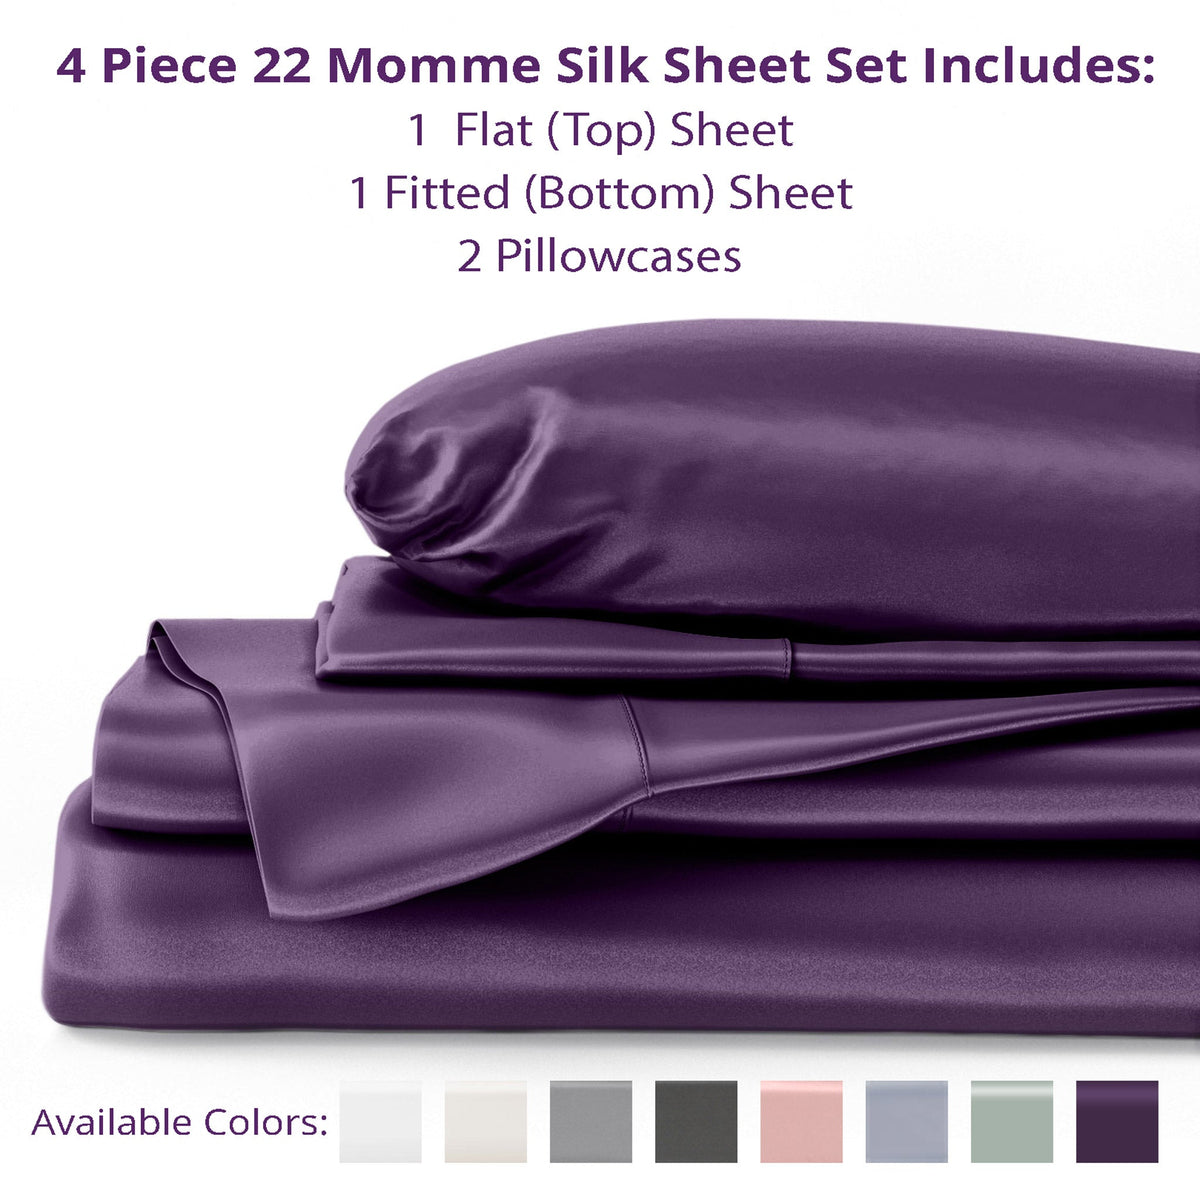 22 Momme Silk Sheet Sets - King